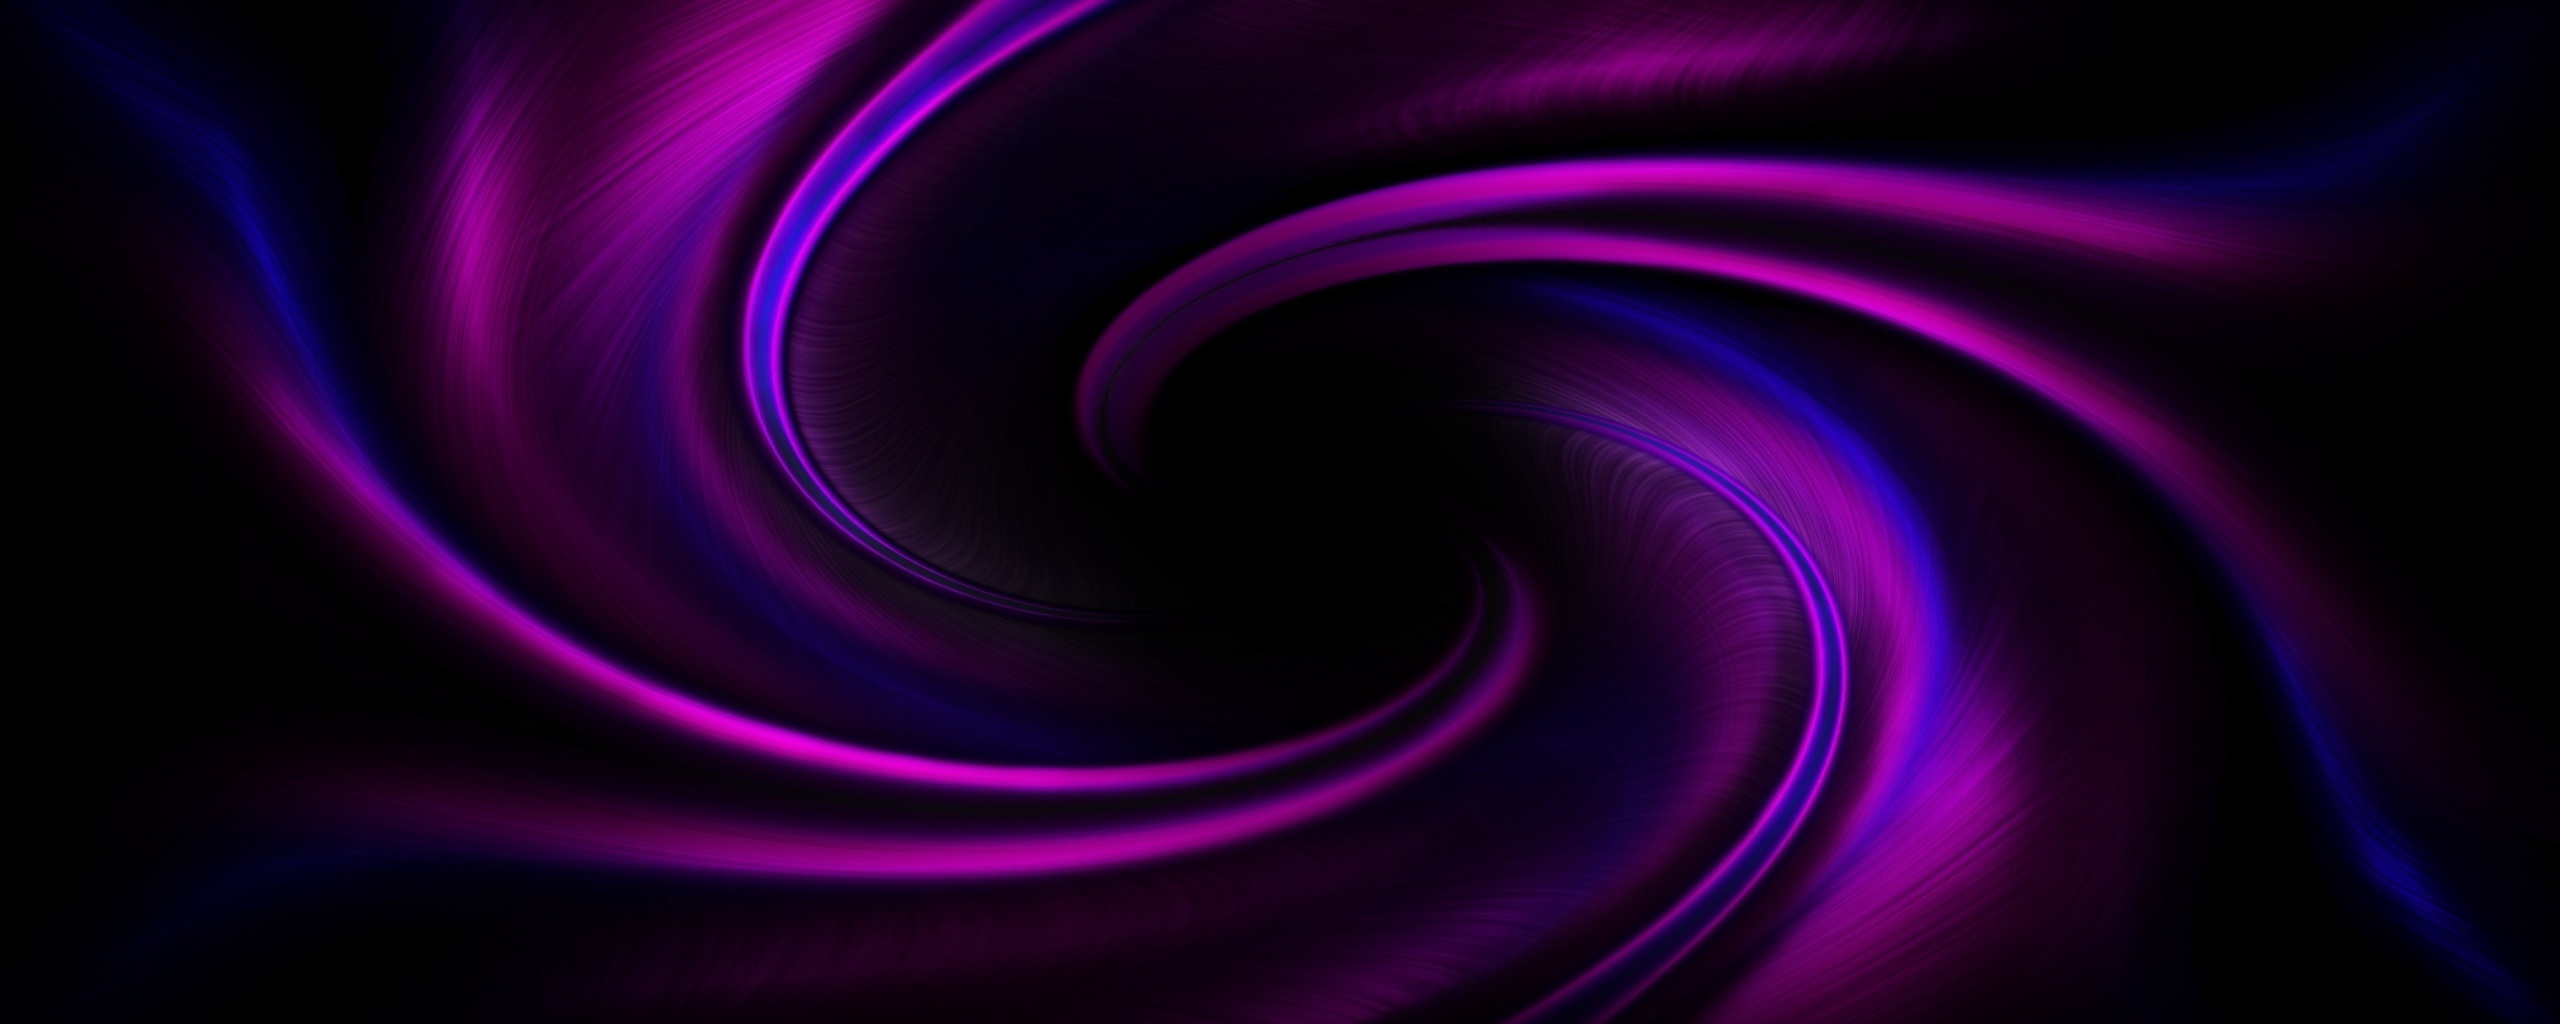 relievo, rotating, purple, swirl, merger 4k - 4k Wallpapers - 40.000 ...